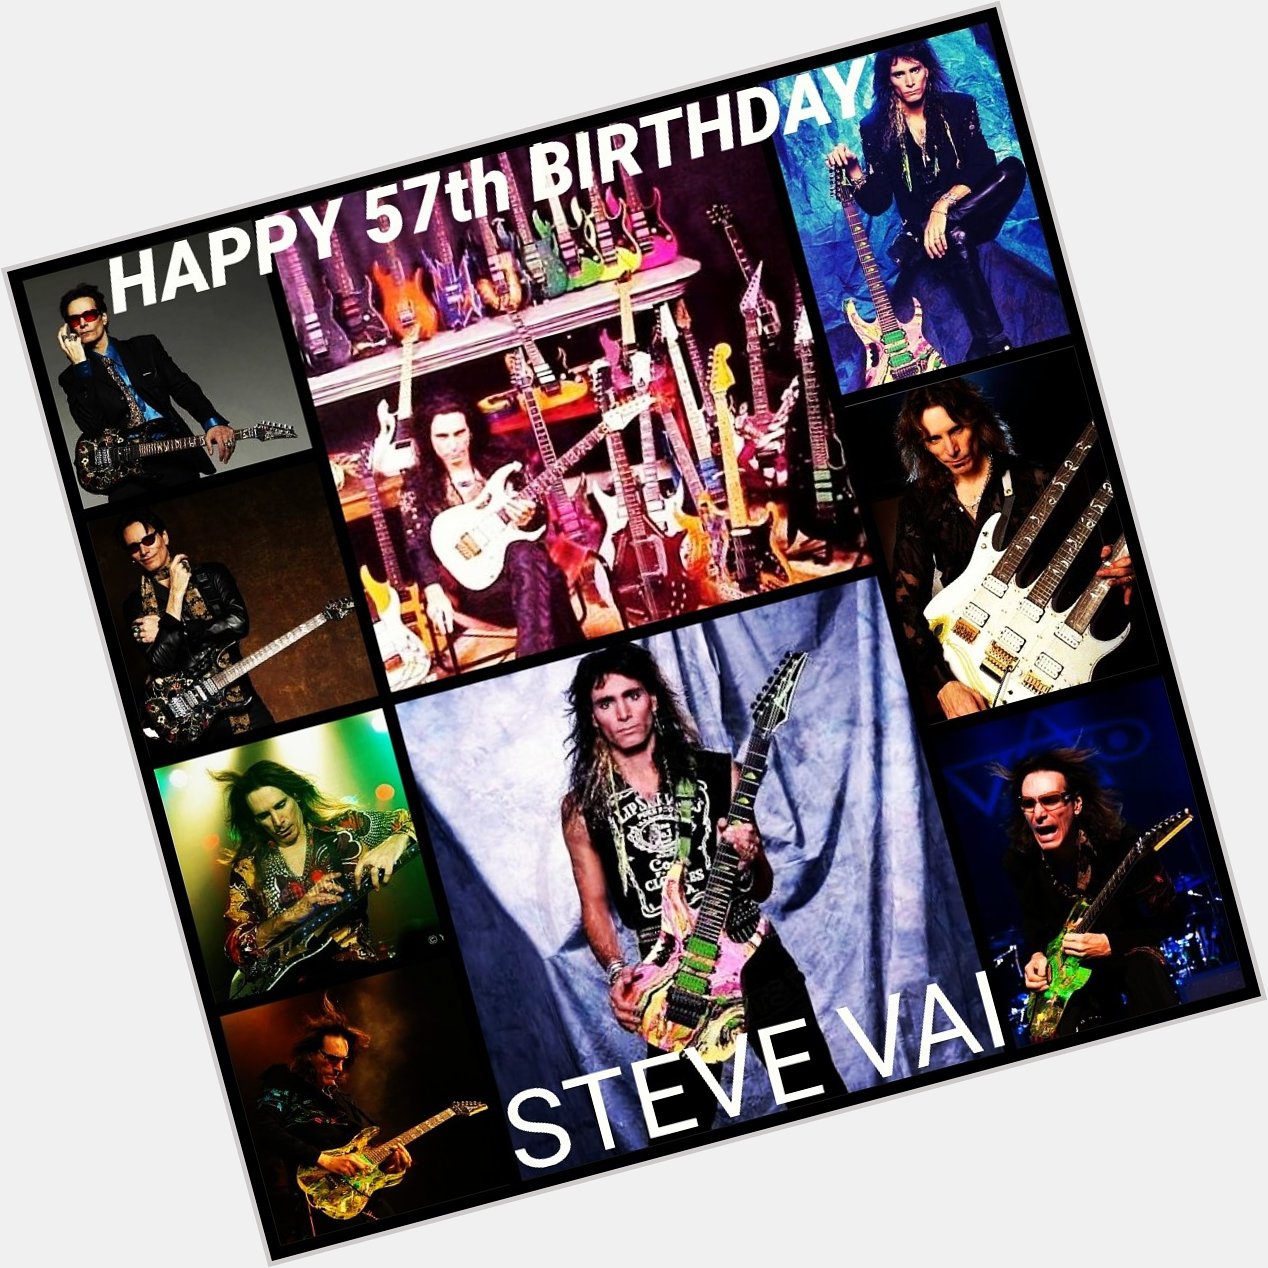 Happy 57th Birthday Steve Vai   